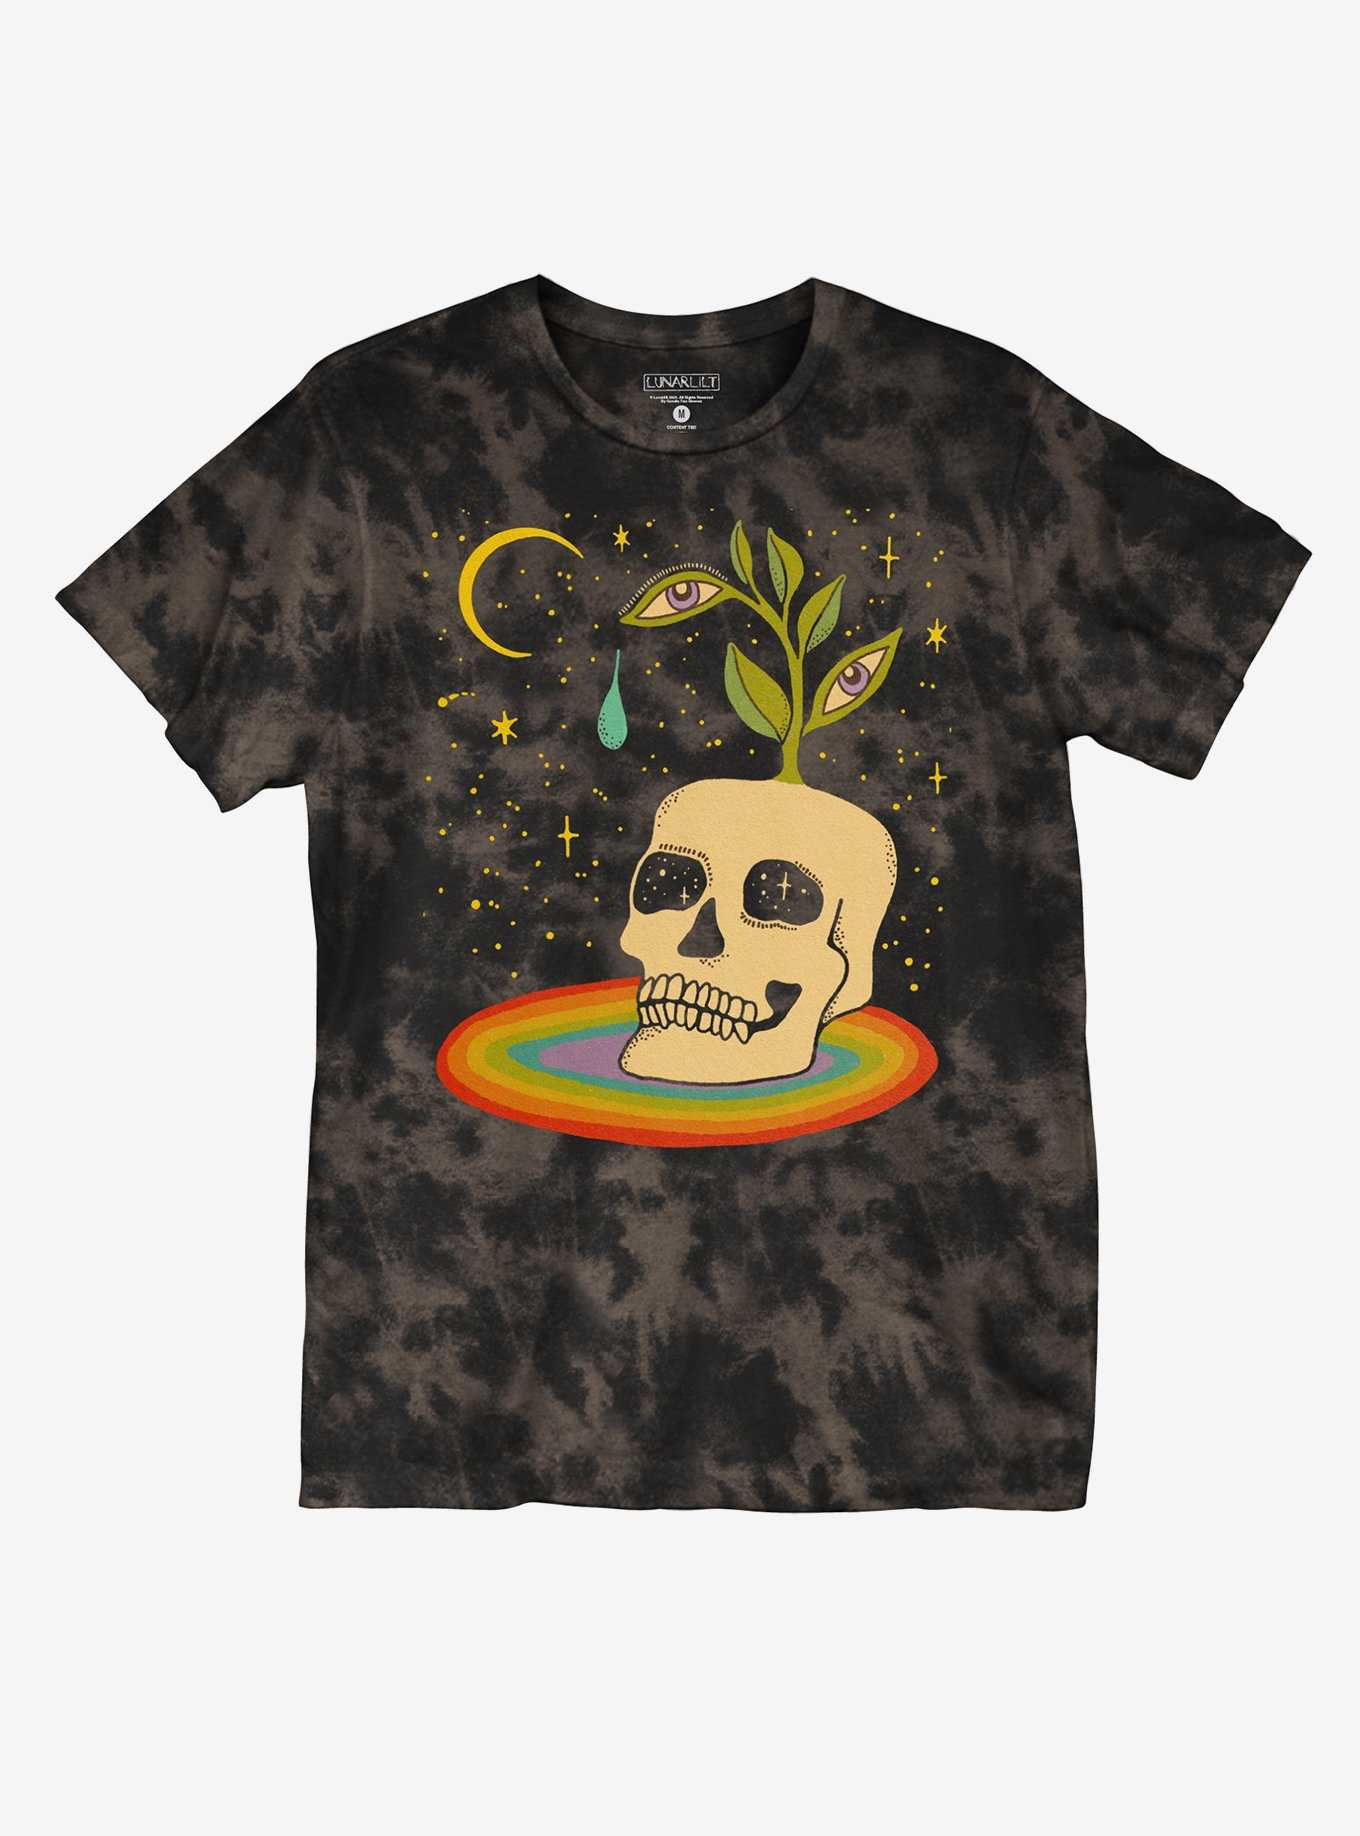 Sprouting Skull Tie-Dye Boyfriend Fit Girls T-Shirt By Lunarlilt, , hi-res